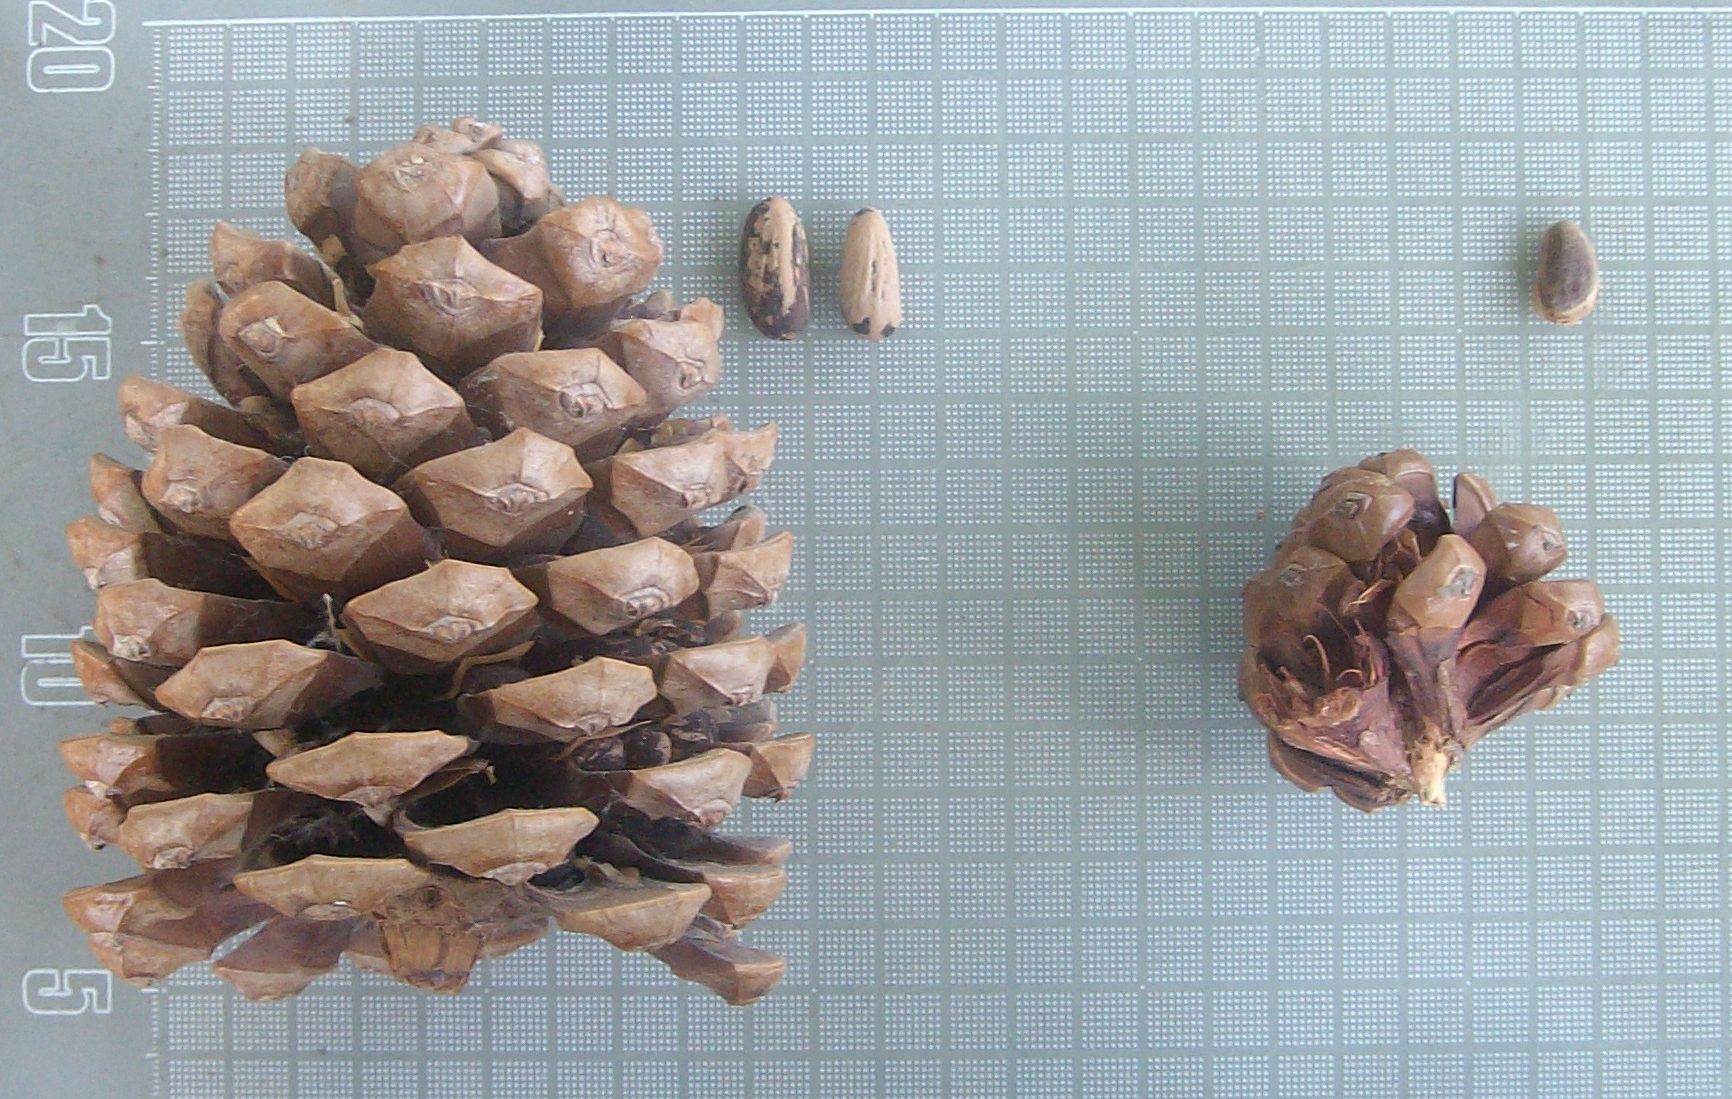 Pinus pinea

            cone and pinenuts (L), unknown Eurasian species cone and

            pinenuts (R)